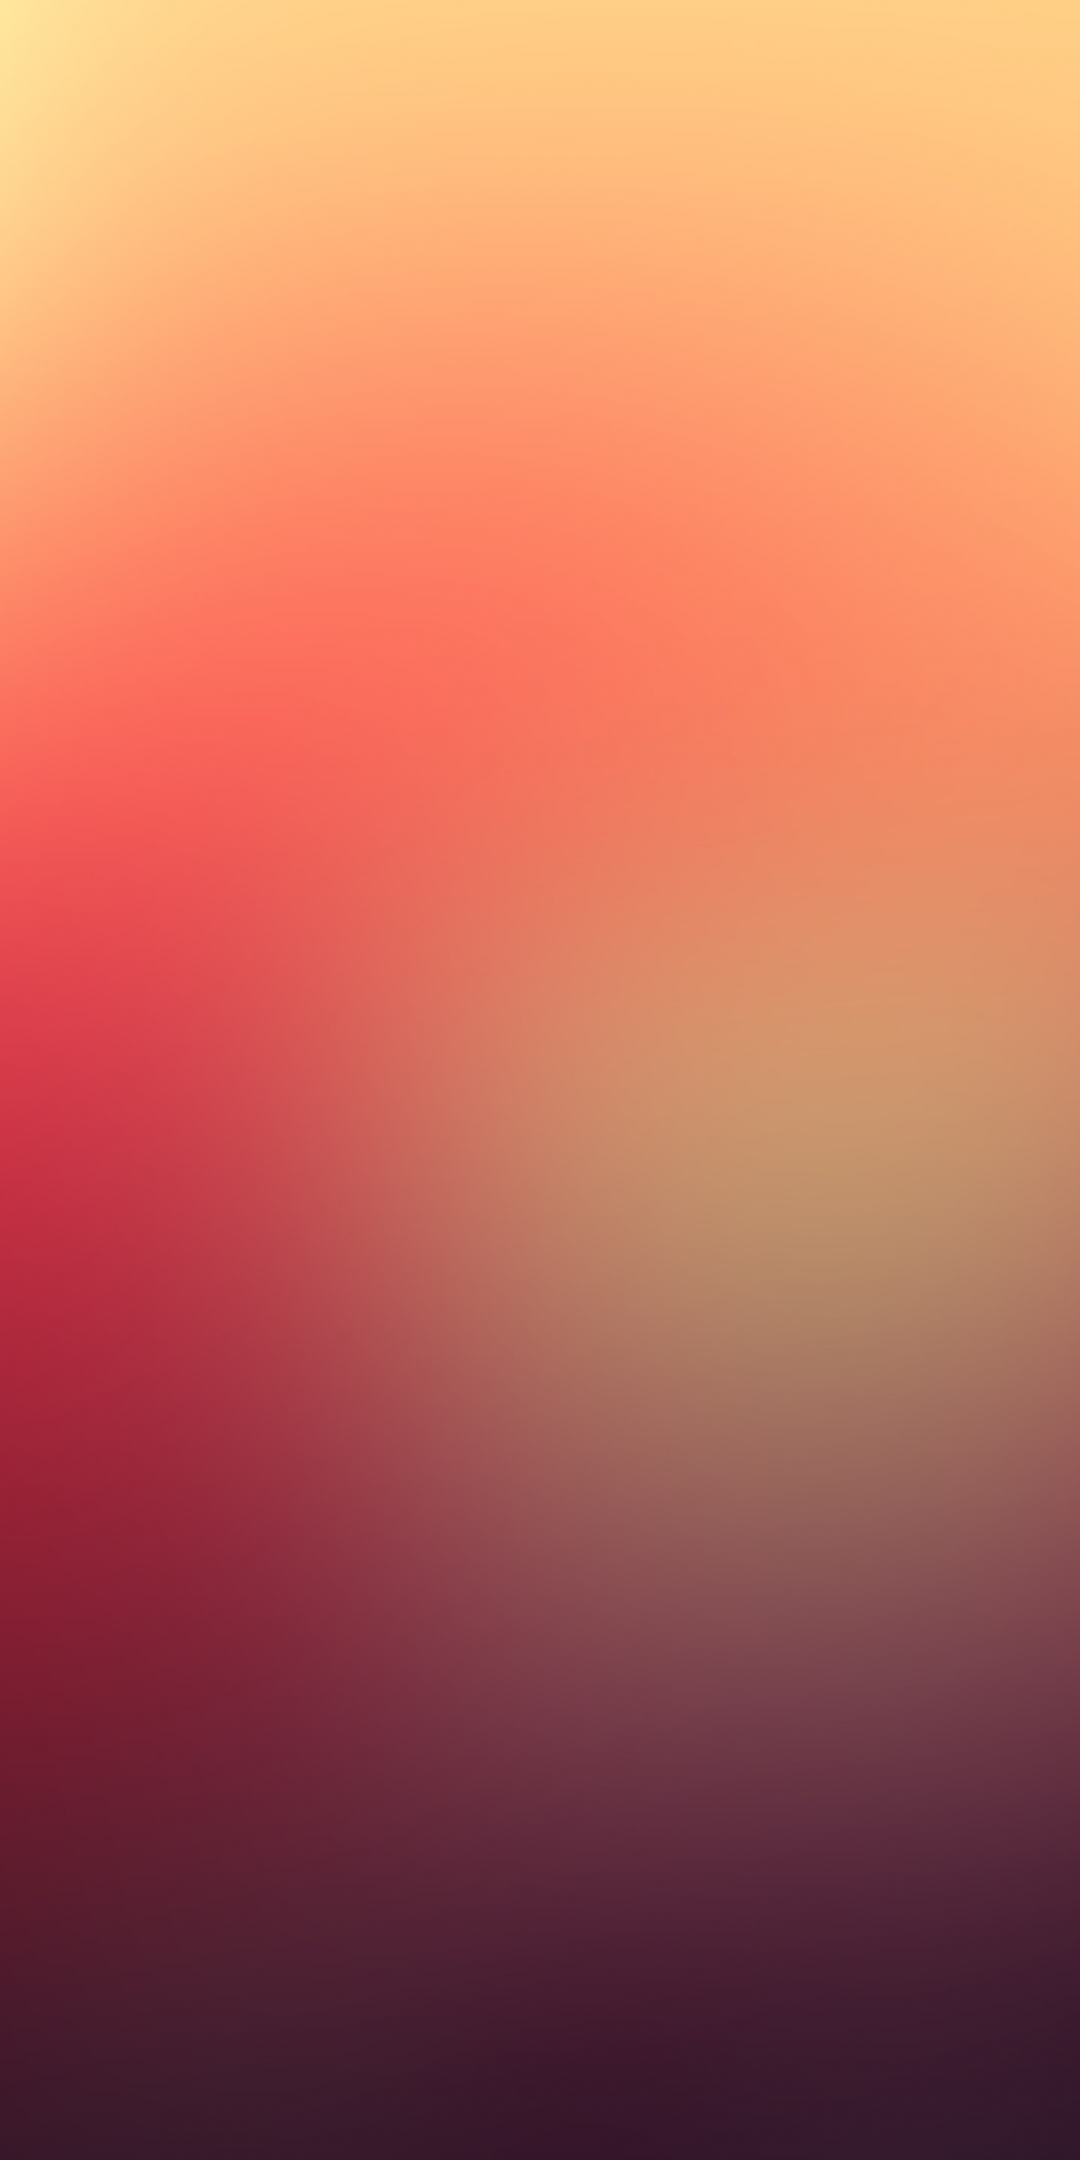 Blurred, orange yellow, abstract, 1080x2160 wallpaper